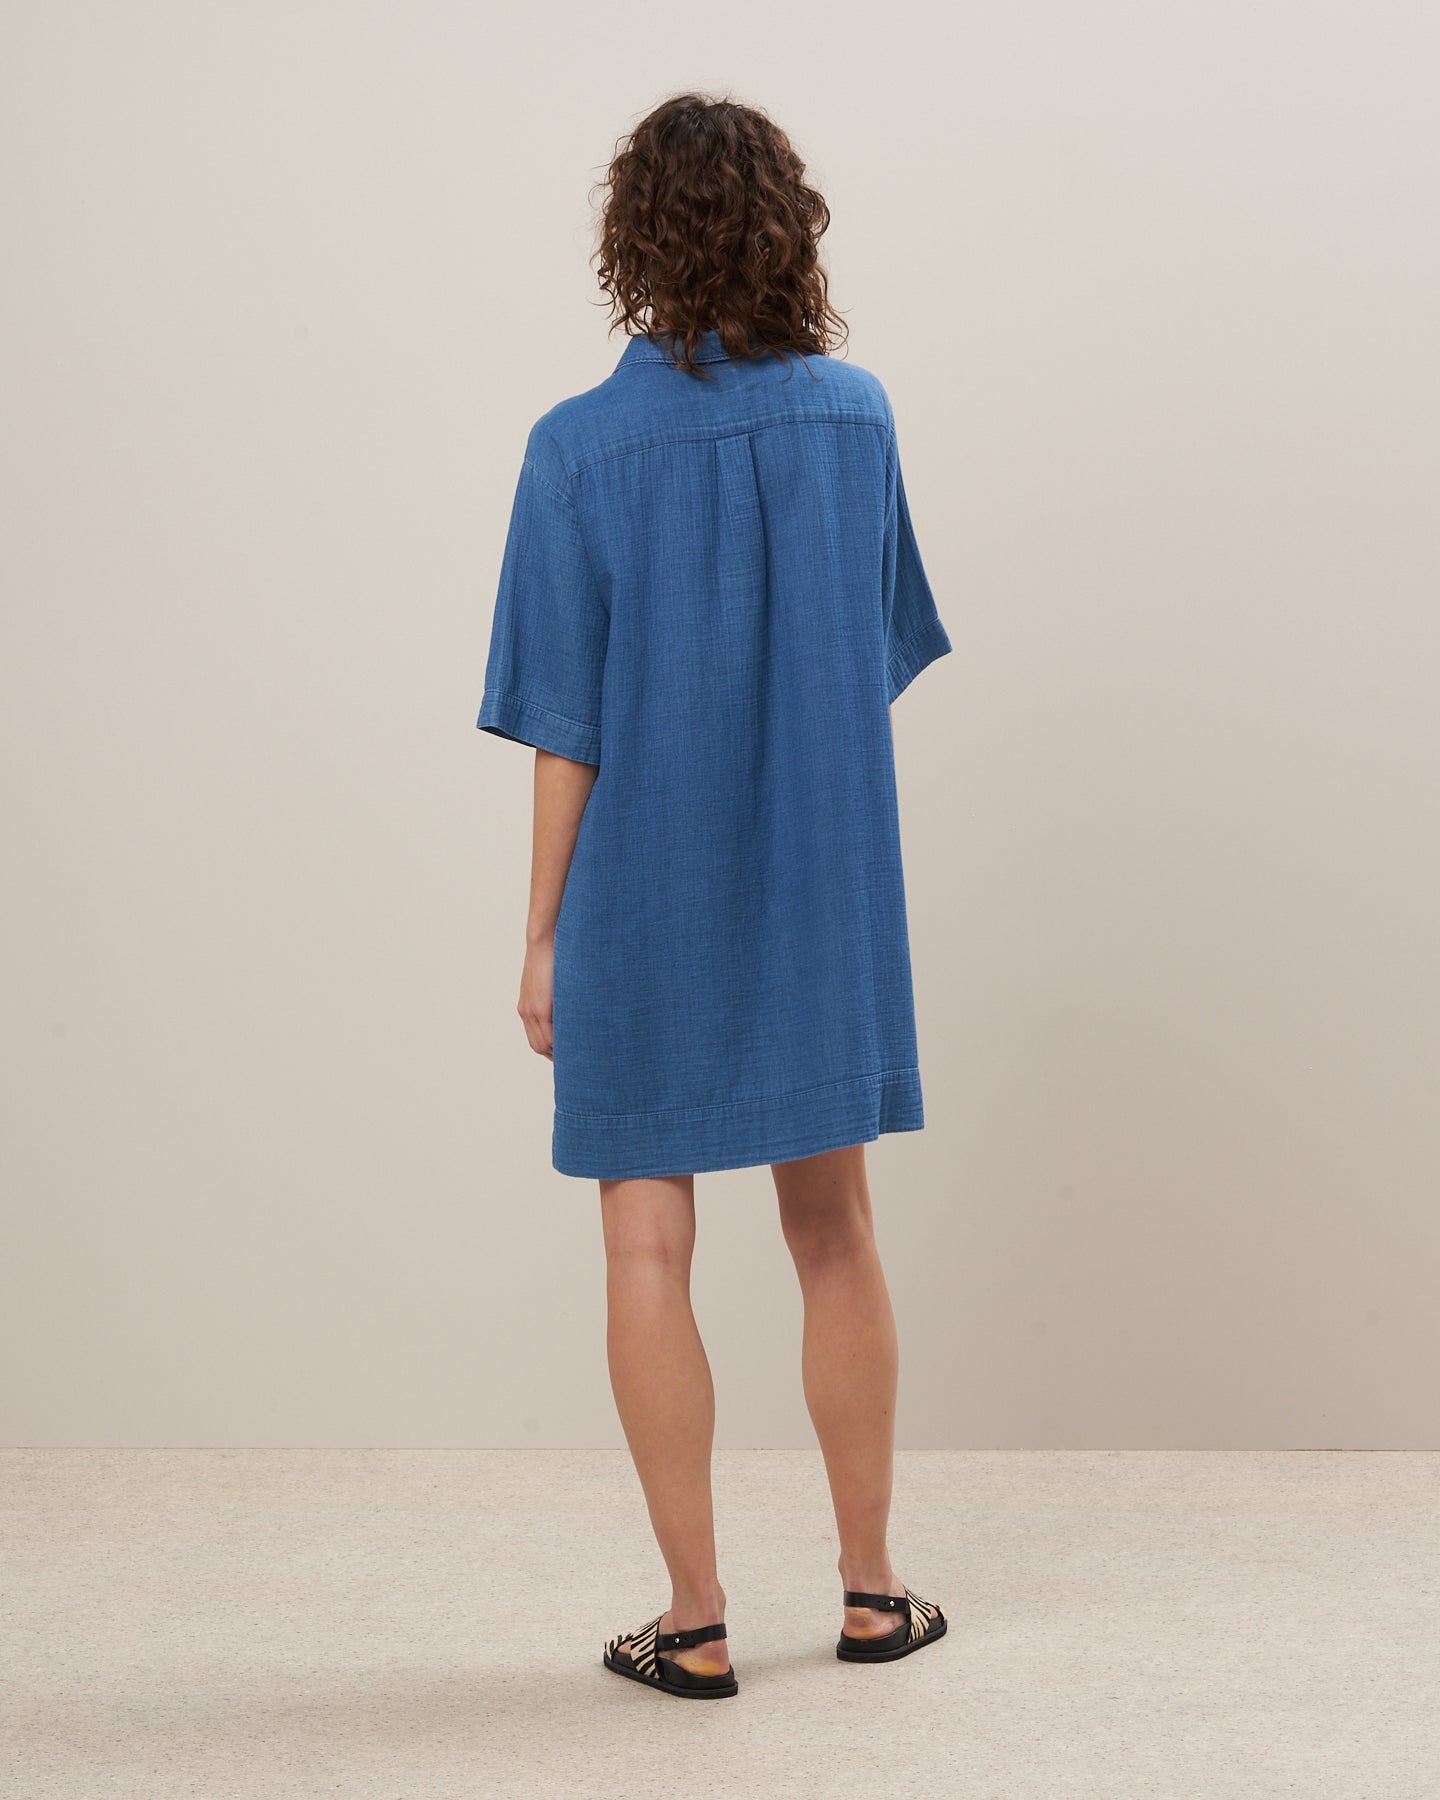 Robe Femme en coton Bleu indigo Roster BBRN616-02